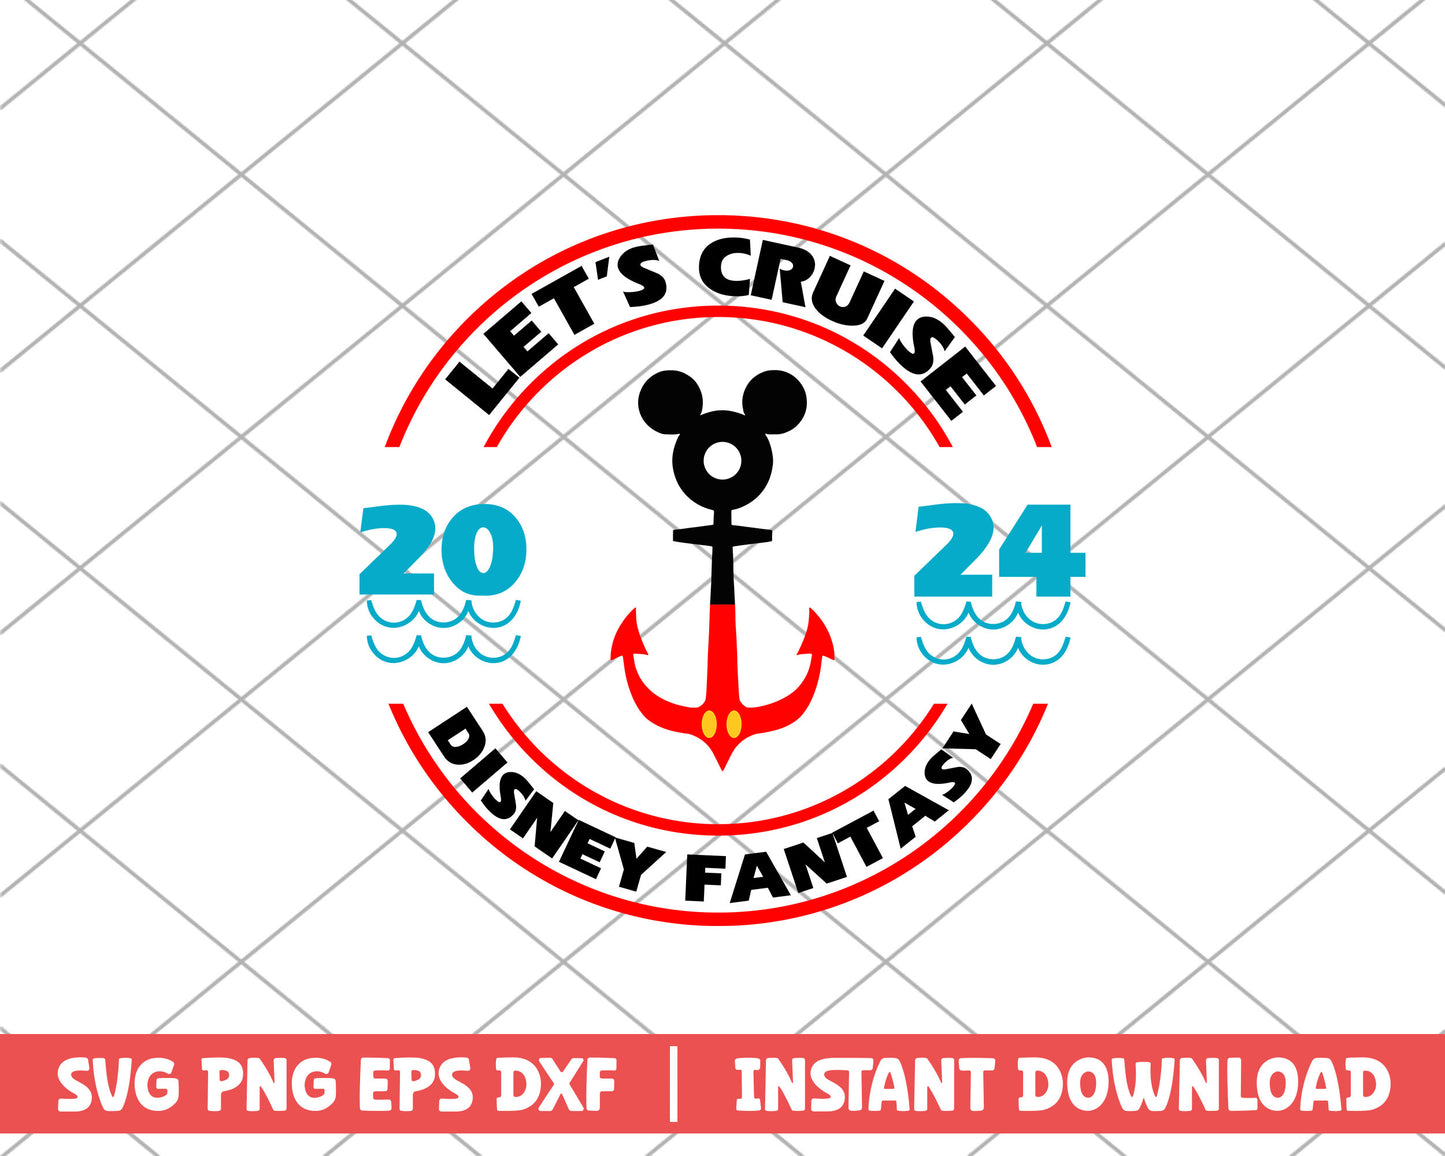 Let's cruise 2024 disney fantasy disney svg